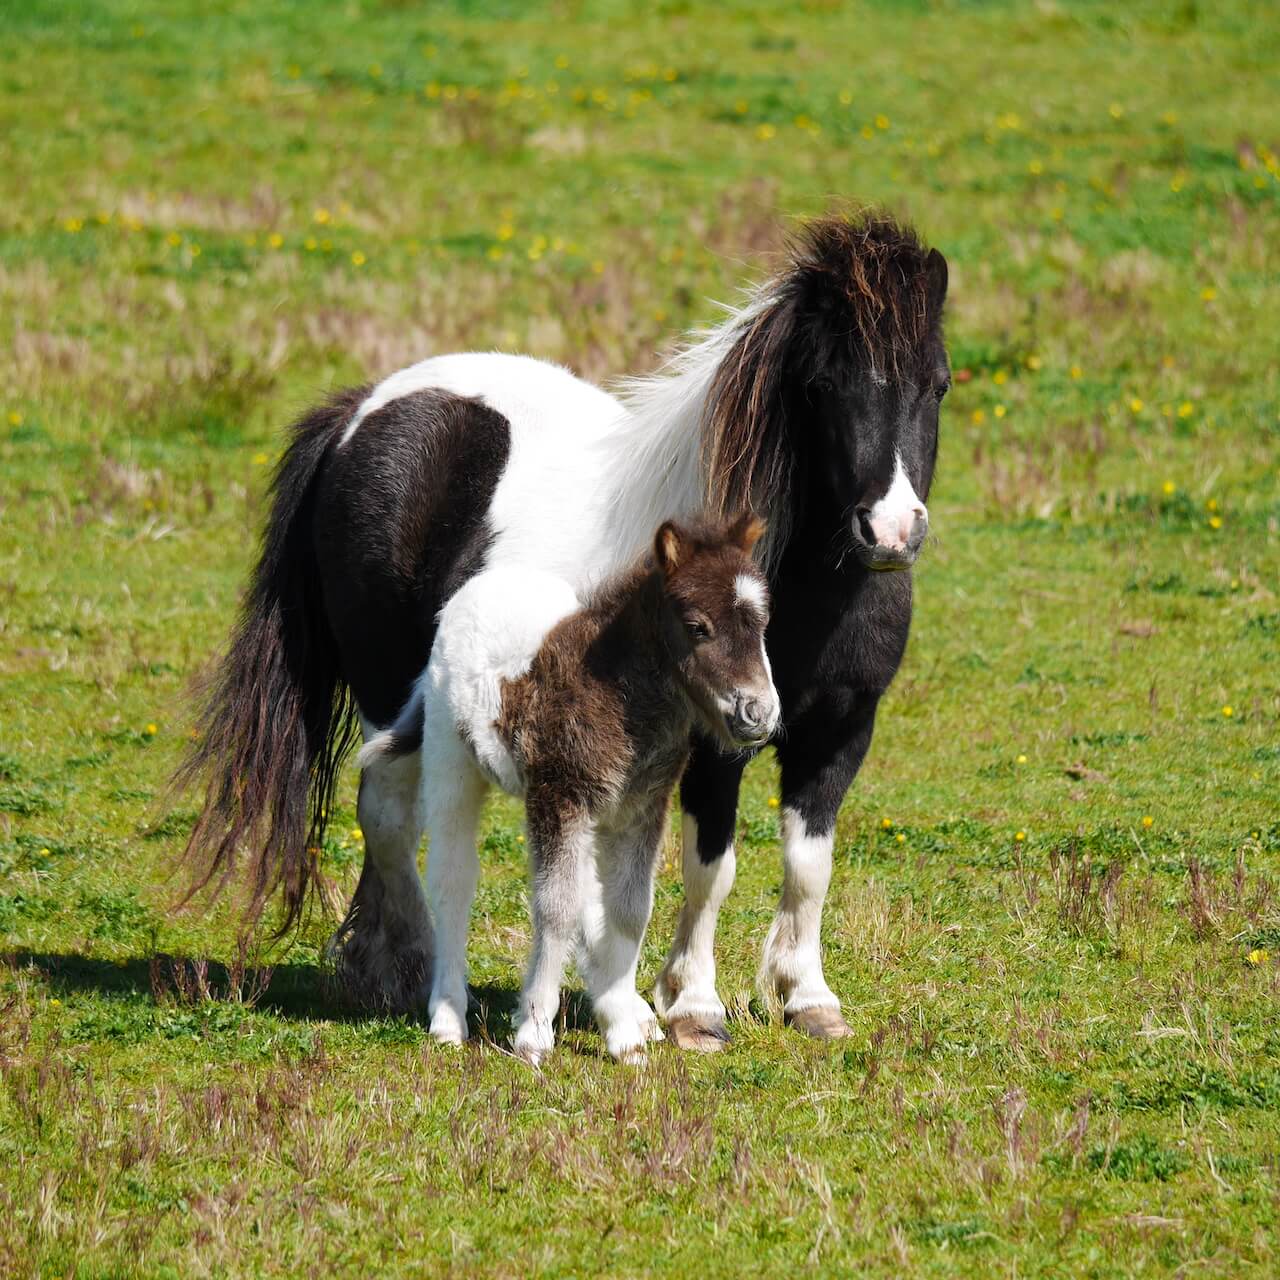 A mum and baby Shetland Pony near the village of Ruthwell, Scotland